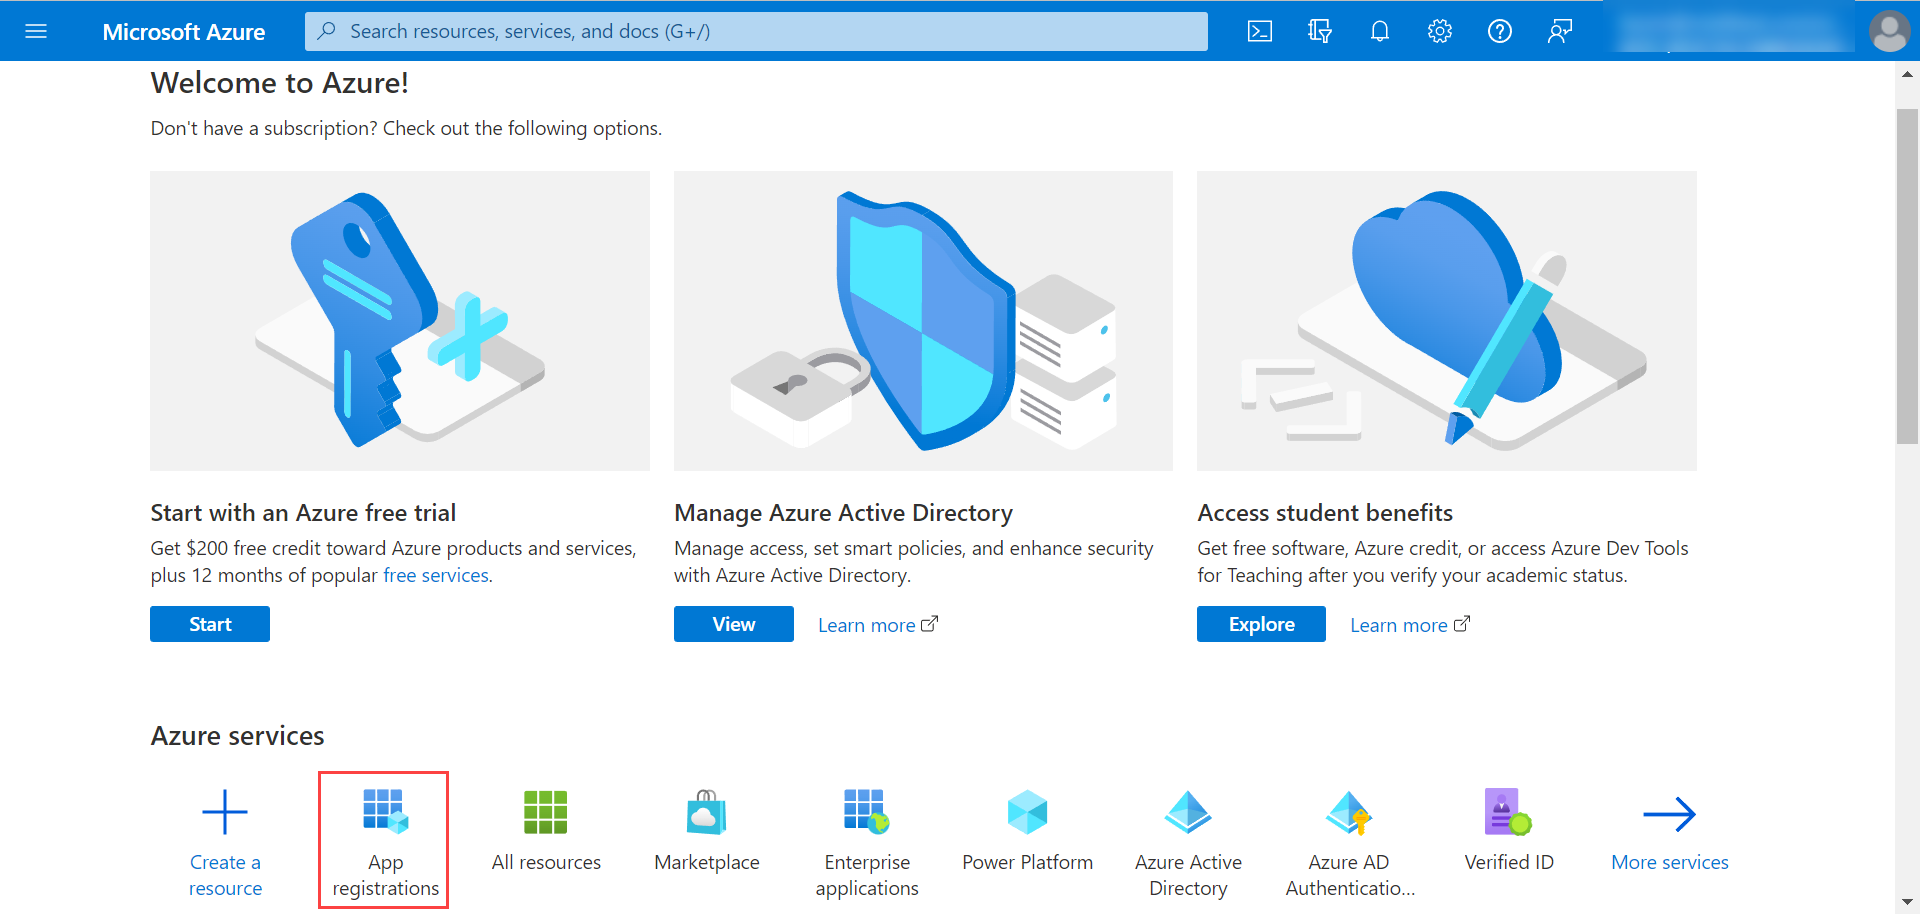 Microsoft Azure Portal Home page